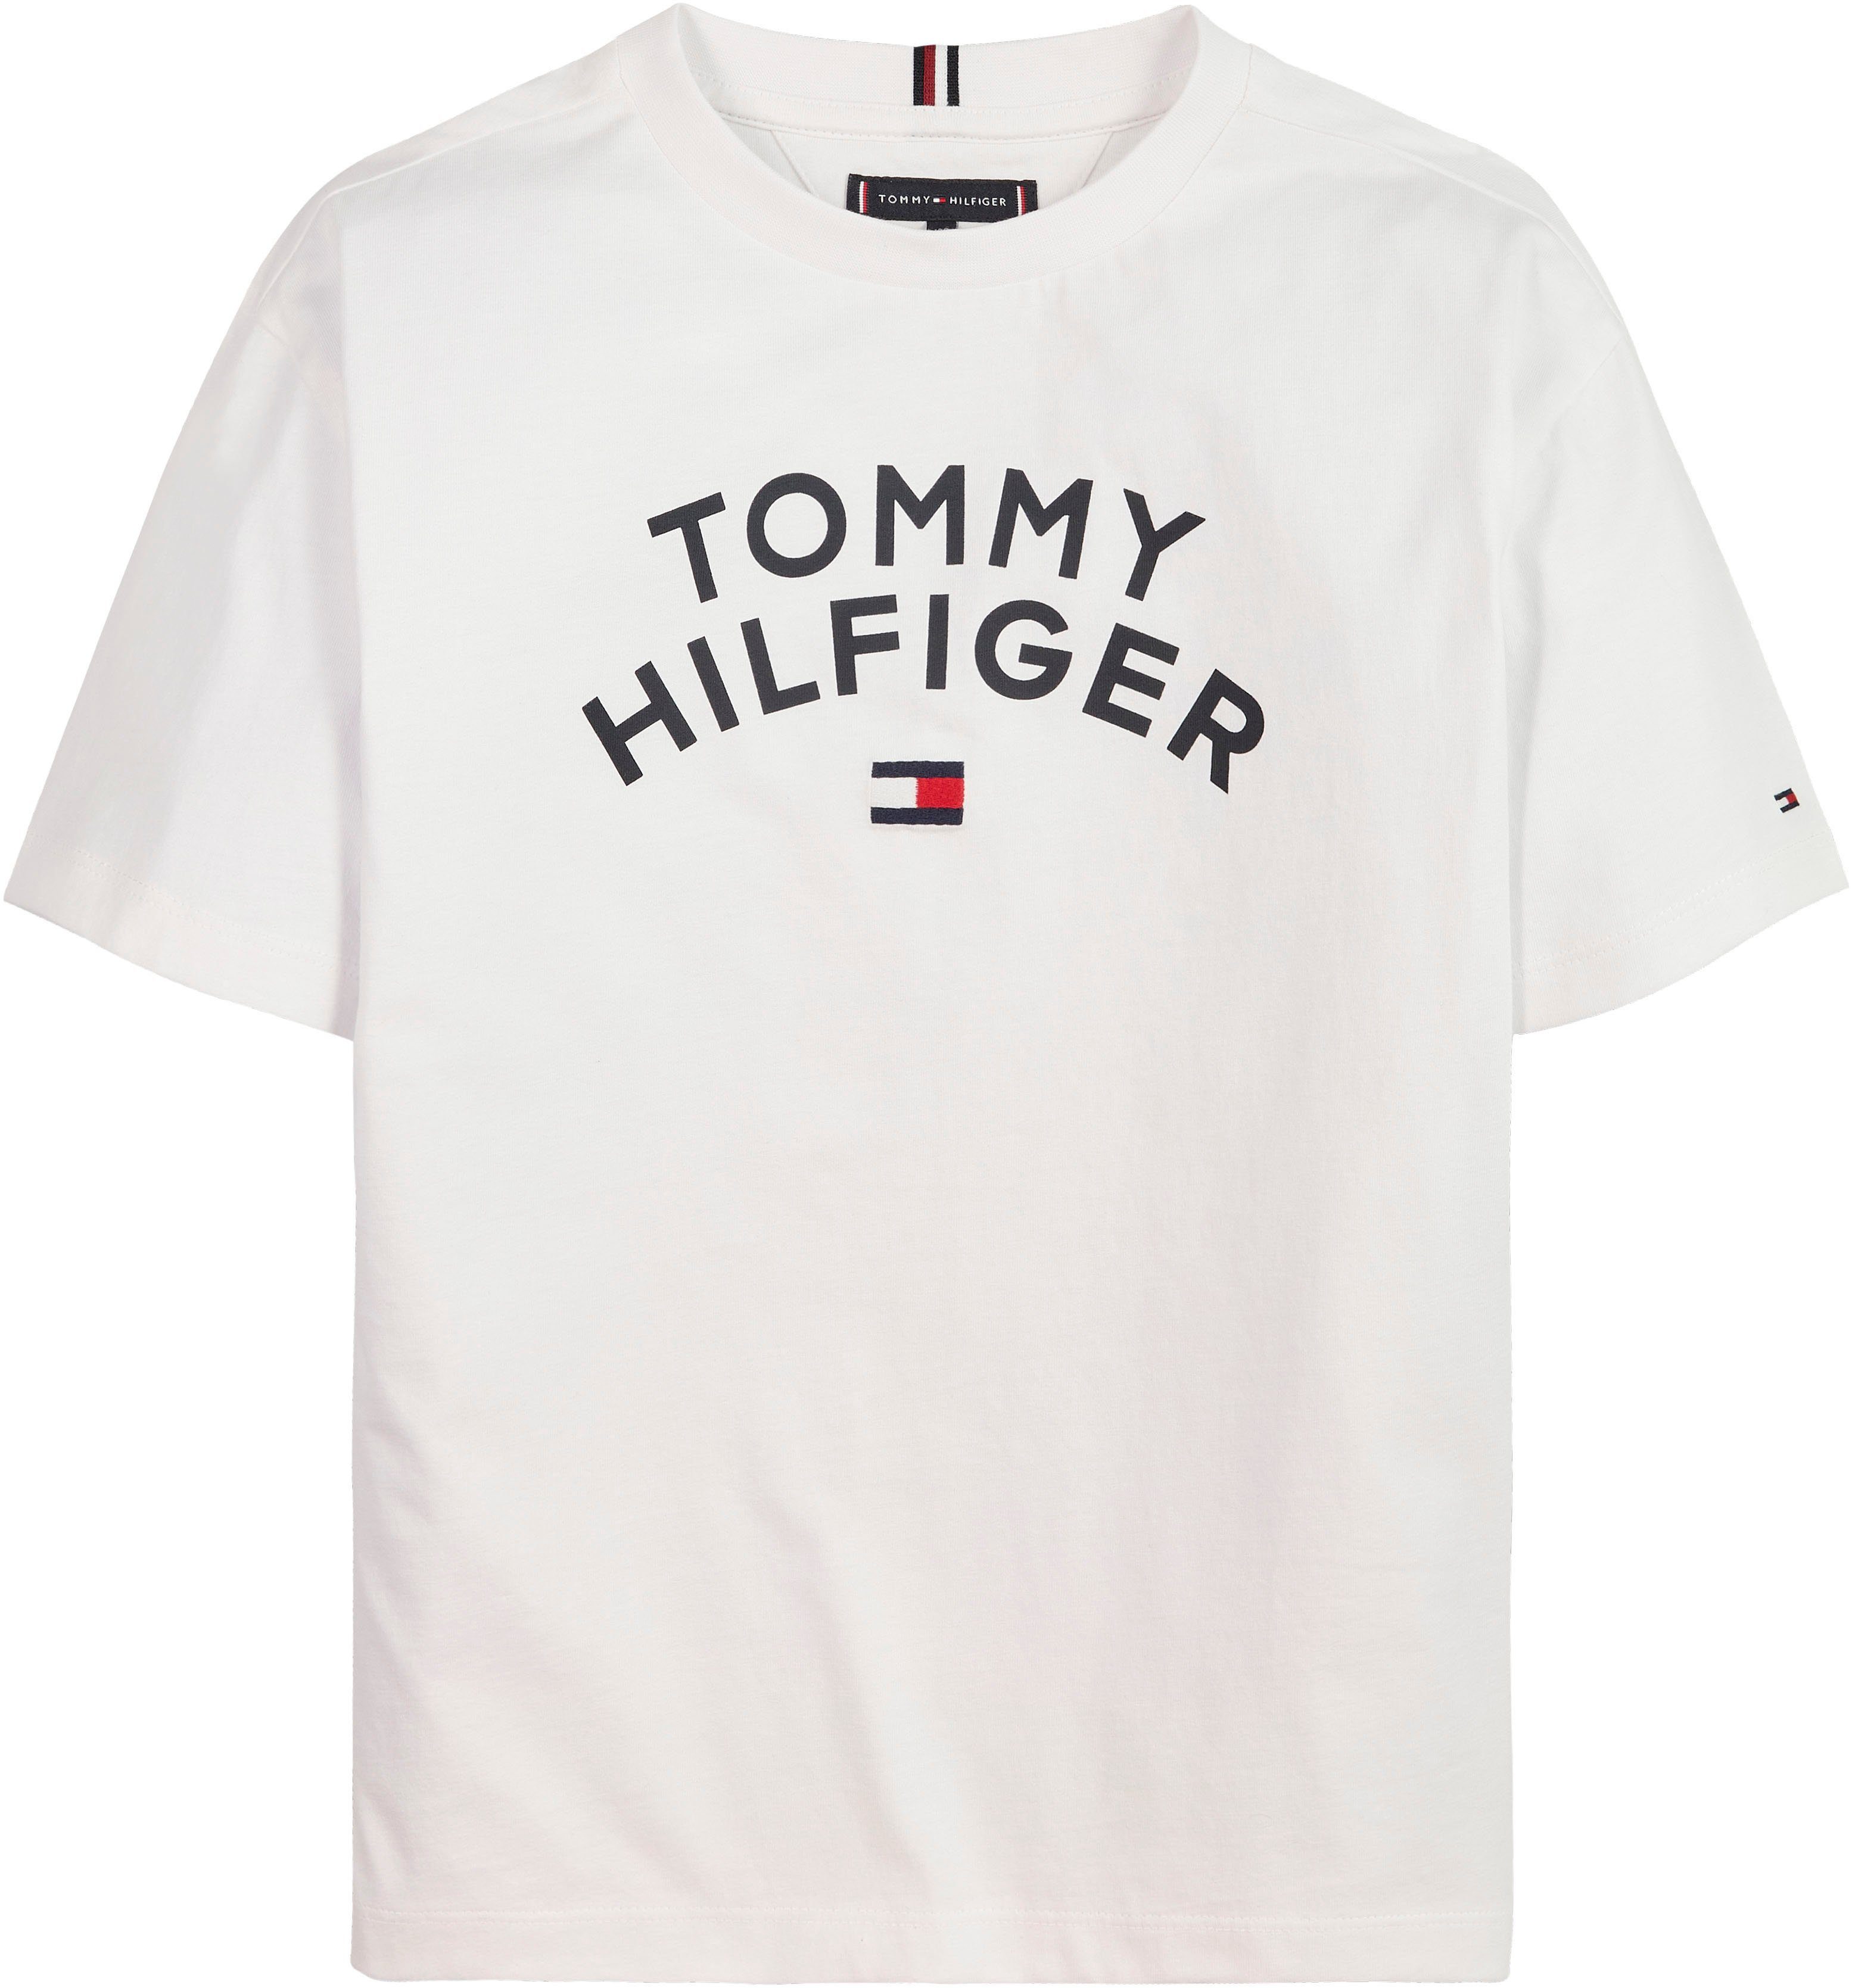 Baumwolle aus reiner Transitional Hilfiger TOMMY TEE, Tommy Single HILFIGER FLAG T-Shirt Jersey